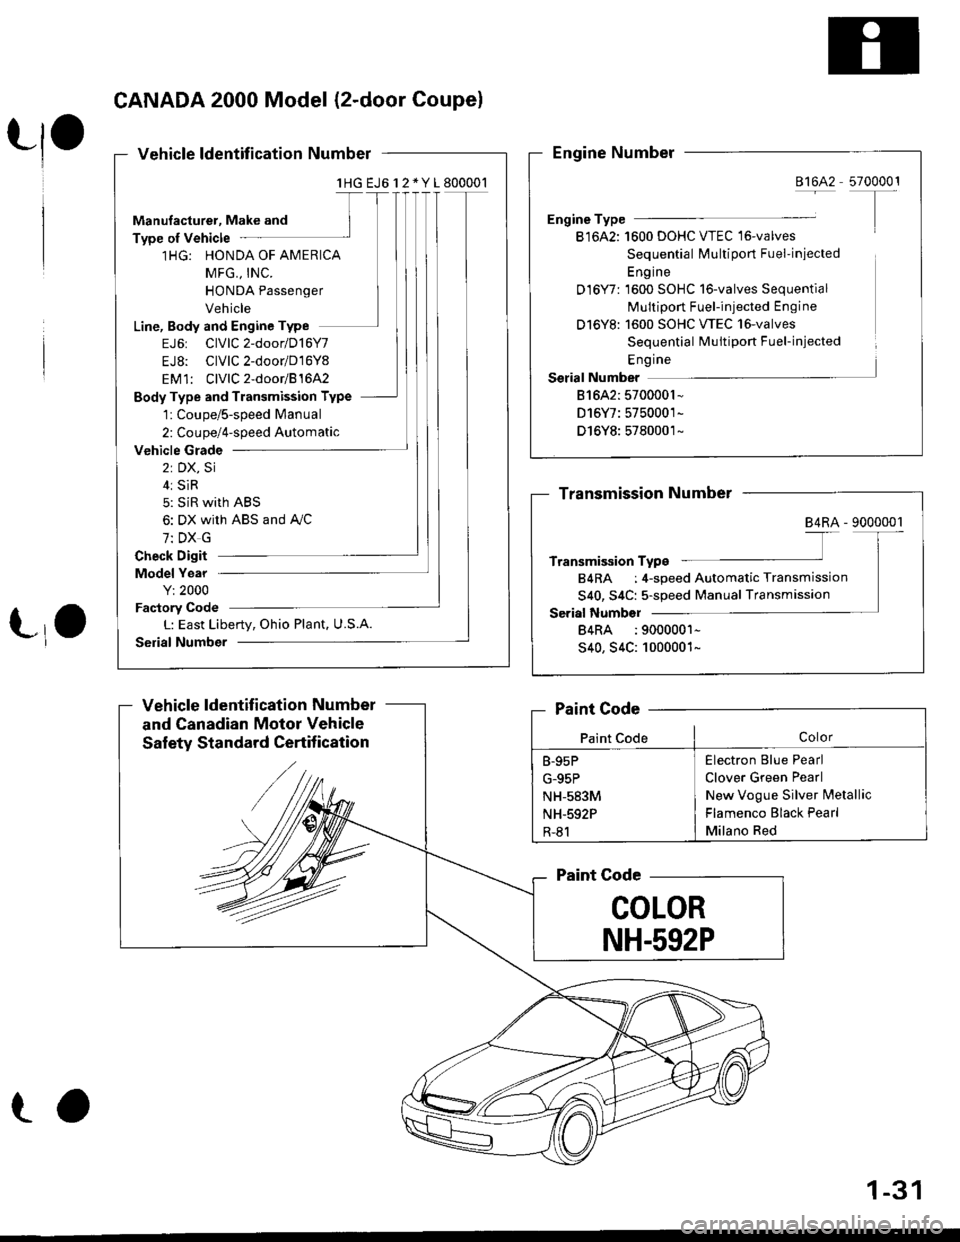 HONDA CIVIC 1998 6.G Owners Manual CANADA 2000 Model (2-door Coupel
Vehicle ldentification Number
lHG EJ6l 2 * Y 1800001
Manufacturer, Make and
Type of Vehicle
1HG: HONDA OF AMERICA
MFG,, INC.
HONDA Passenger
Vehicle
Line, Body and En